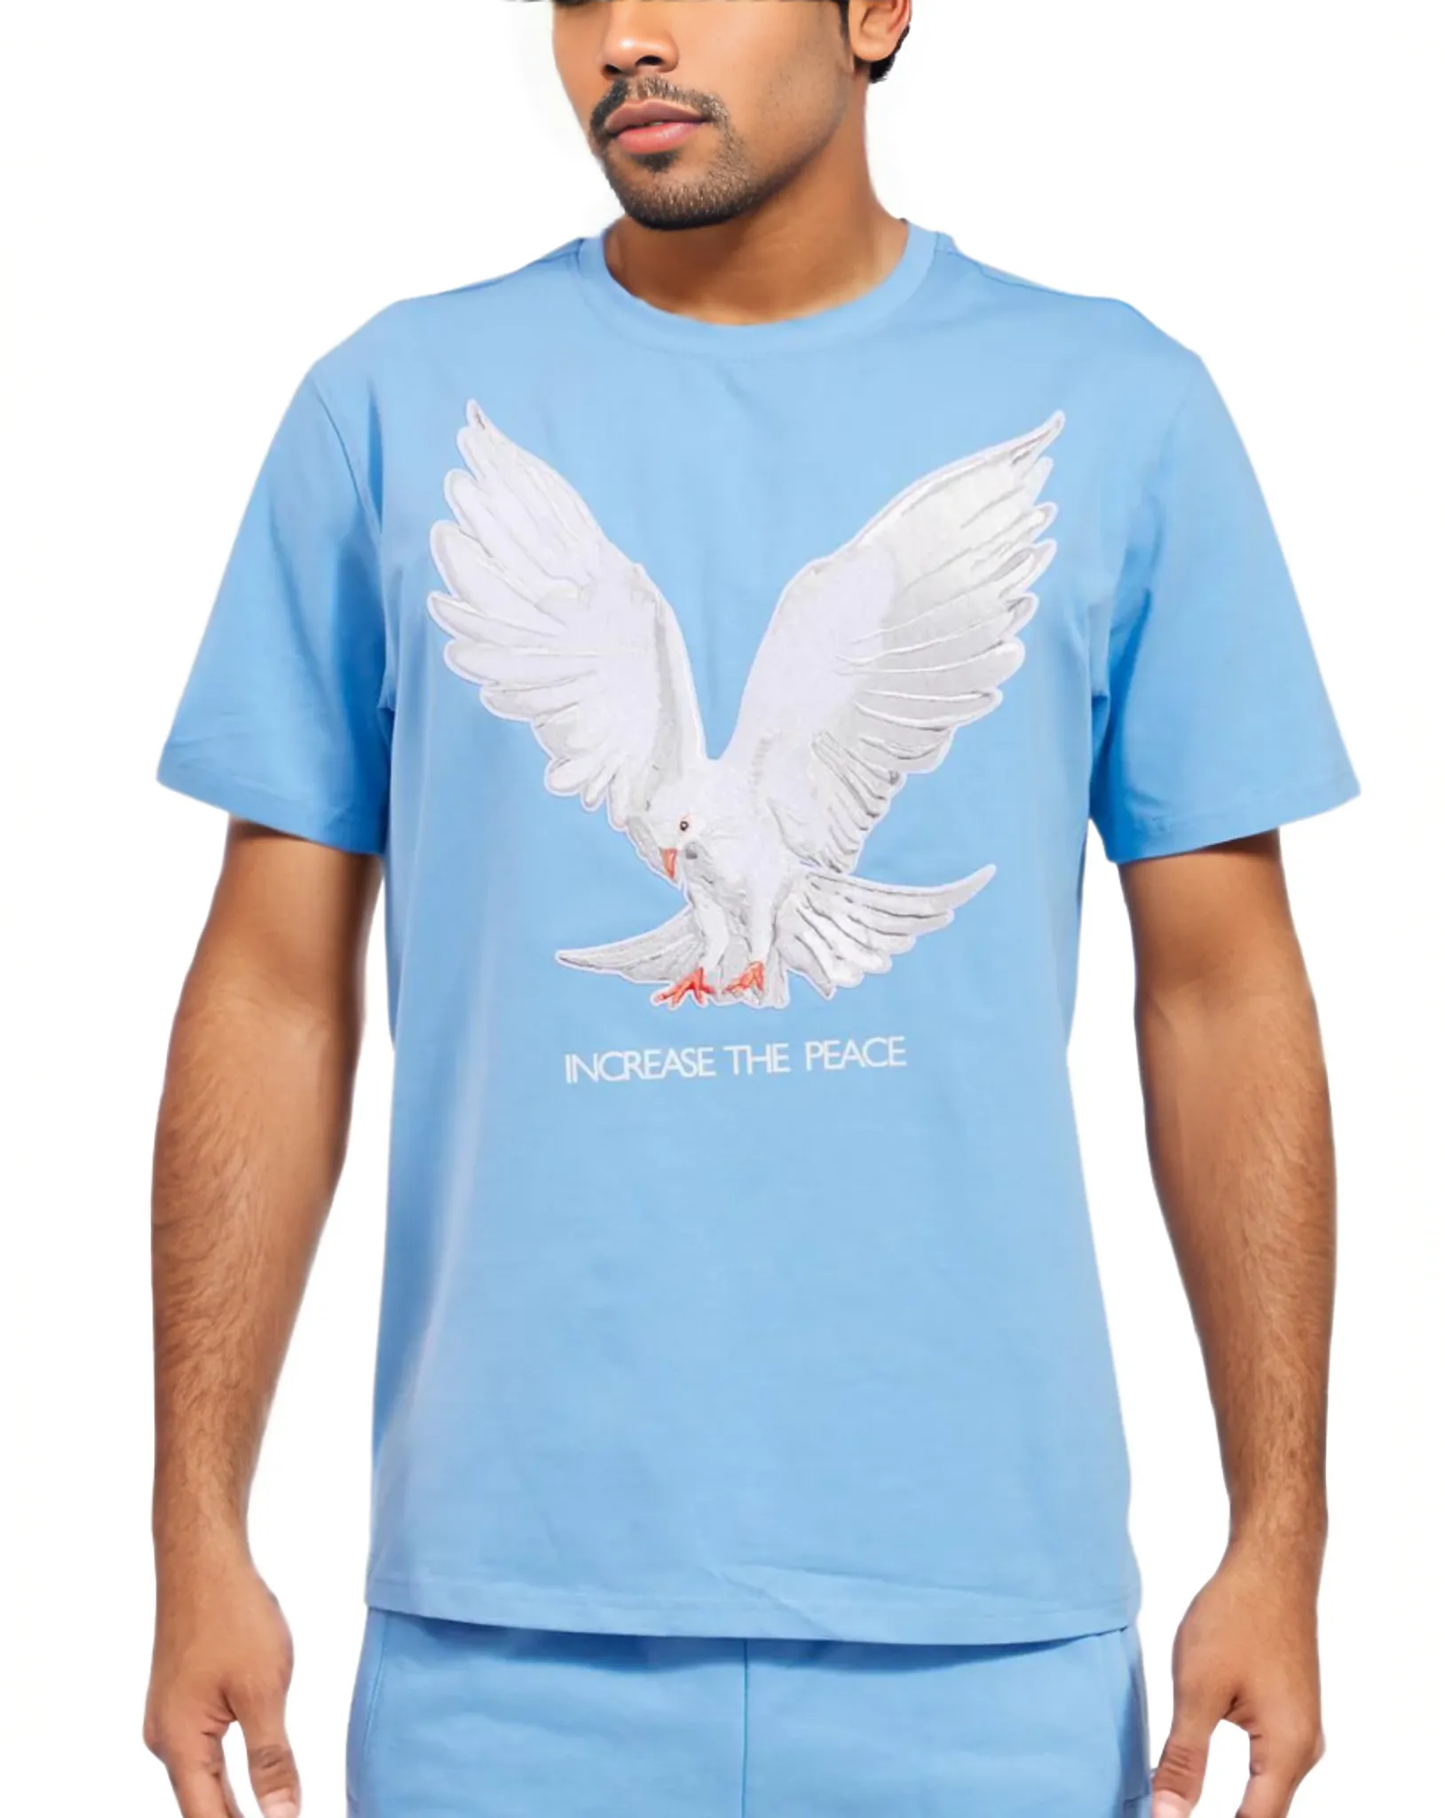 Increase The Peace Shirt